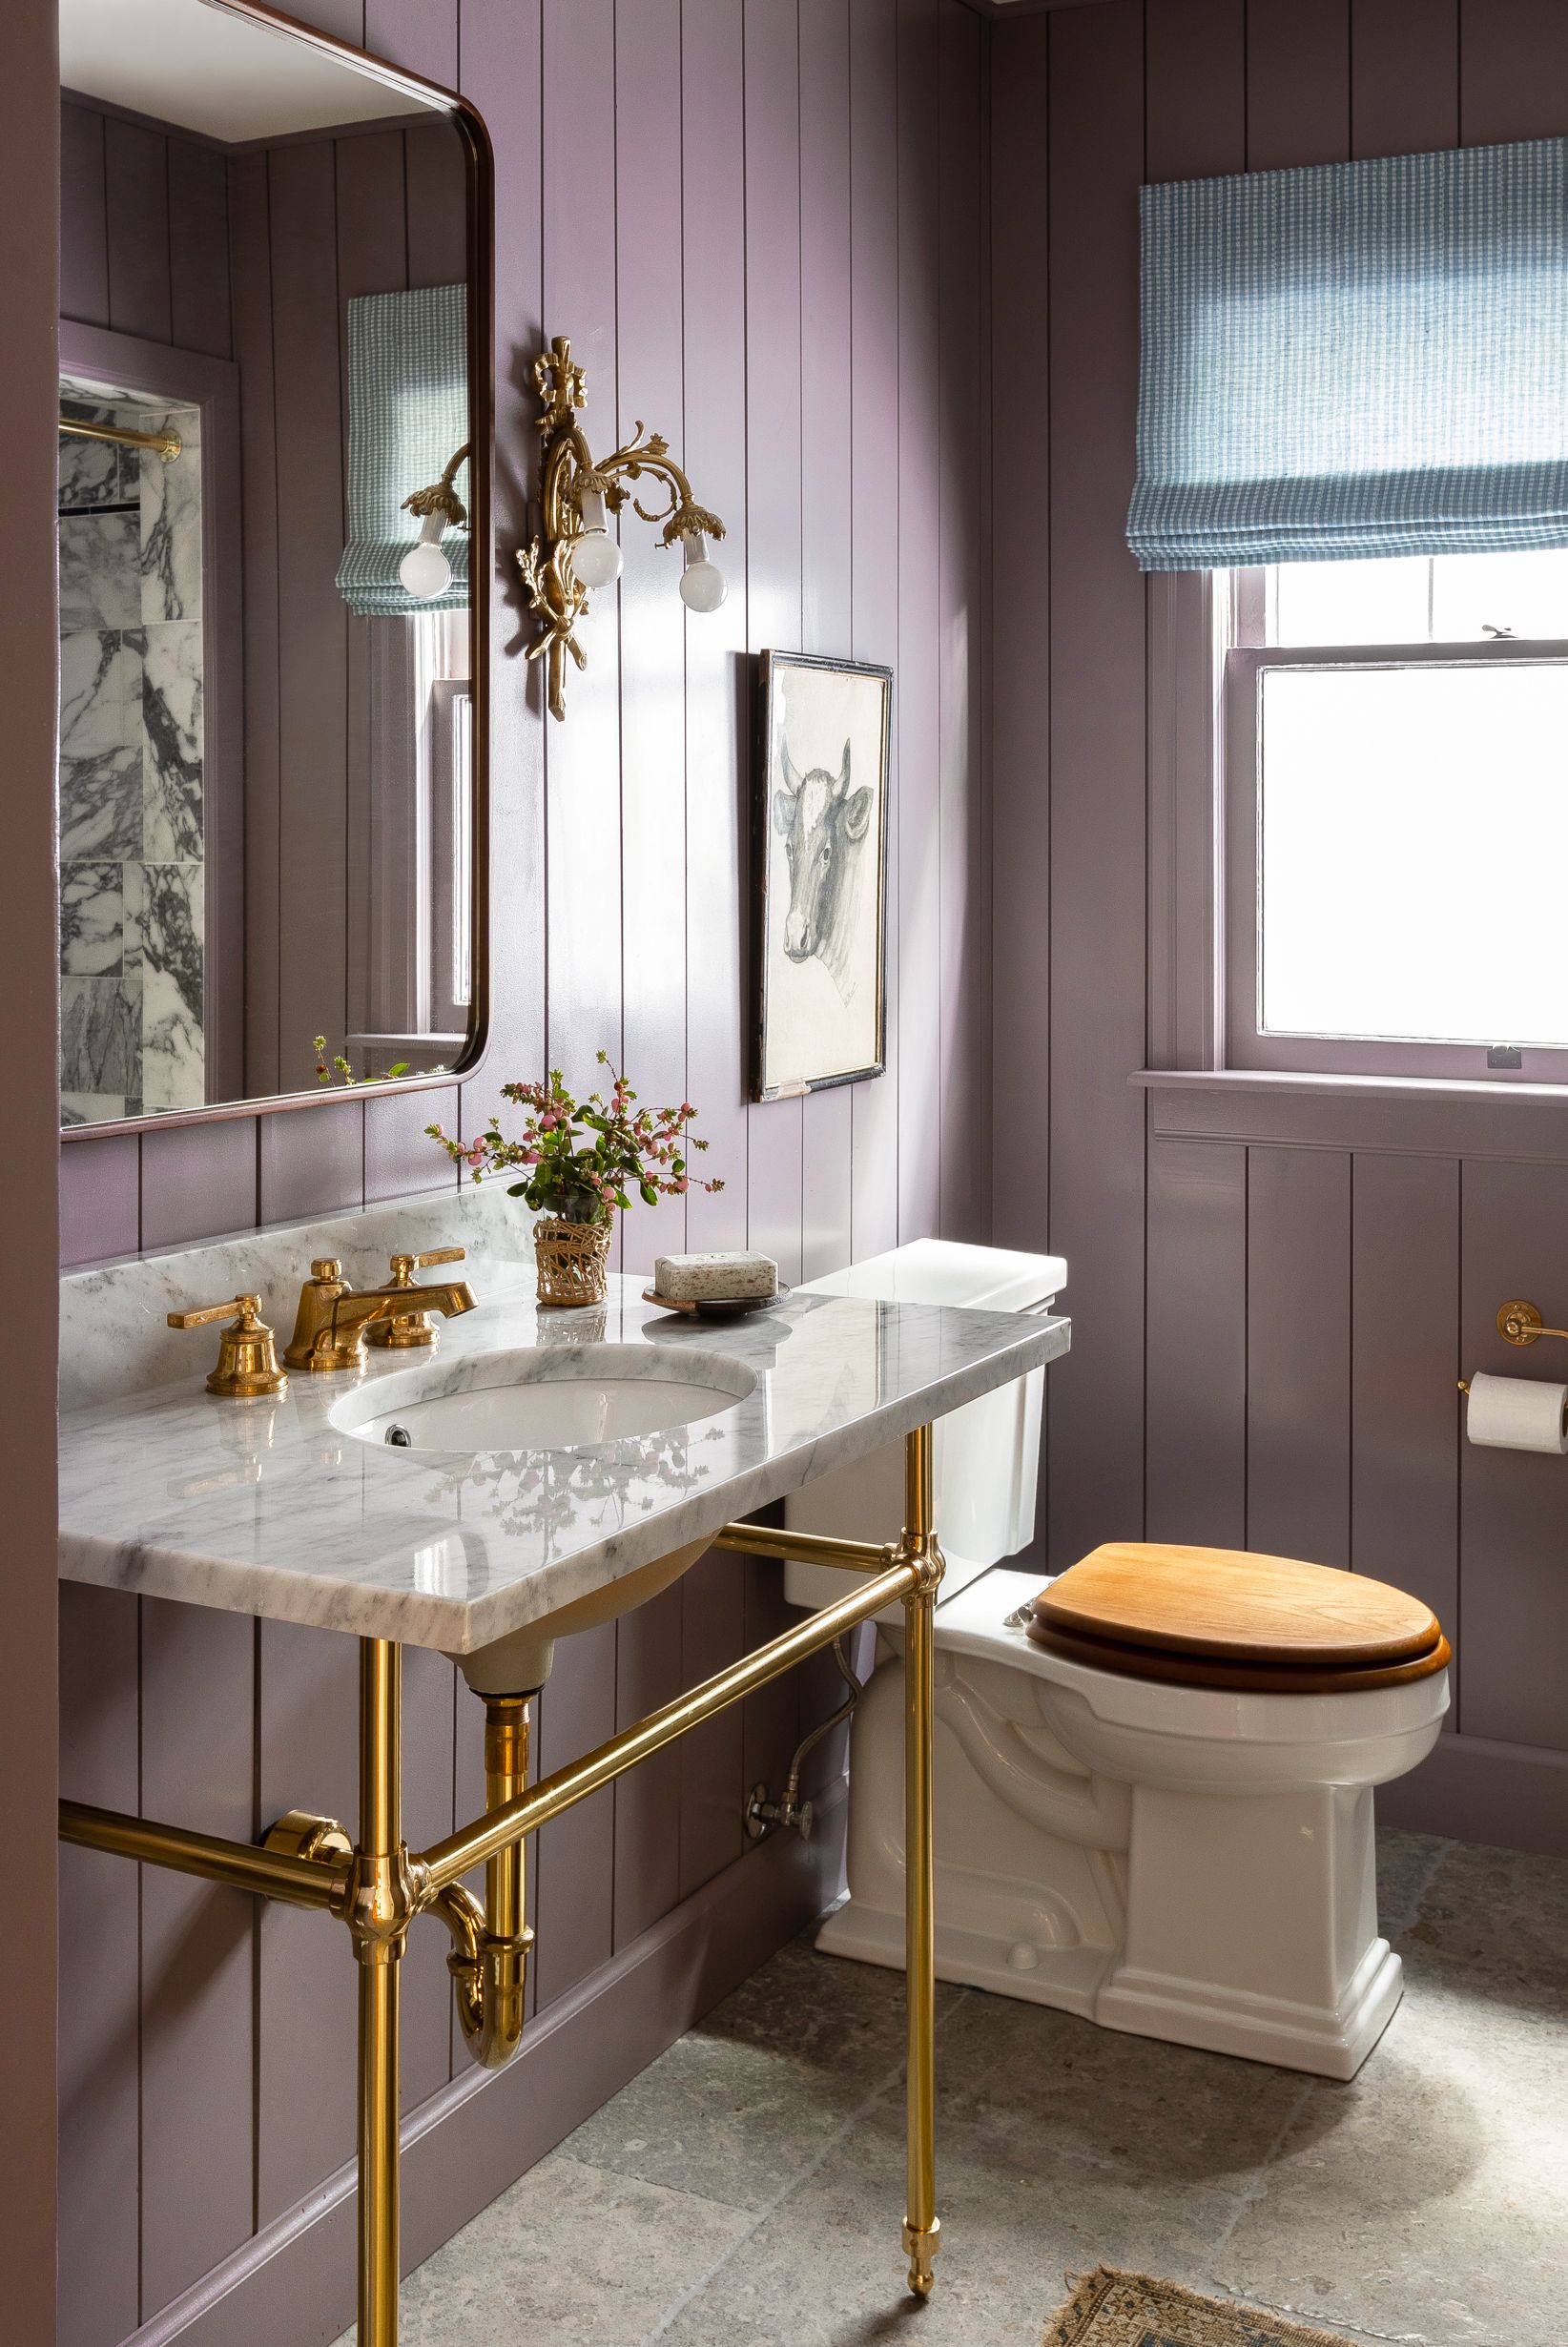 purple bathroom color ideas